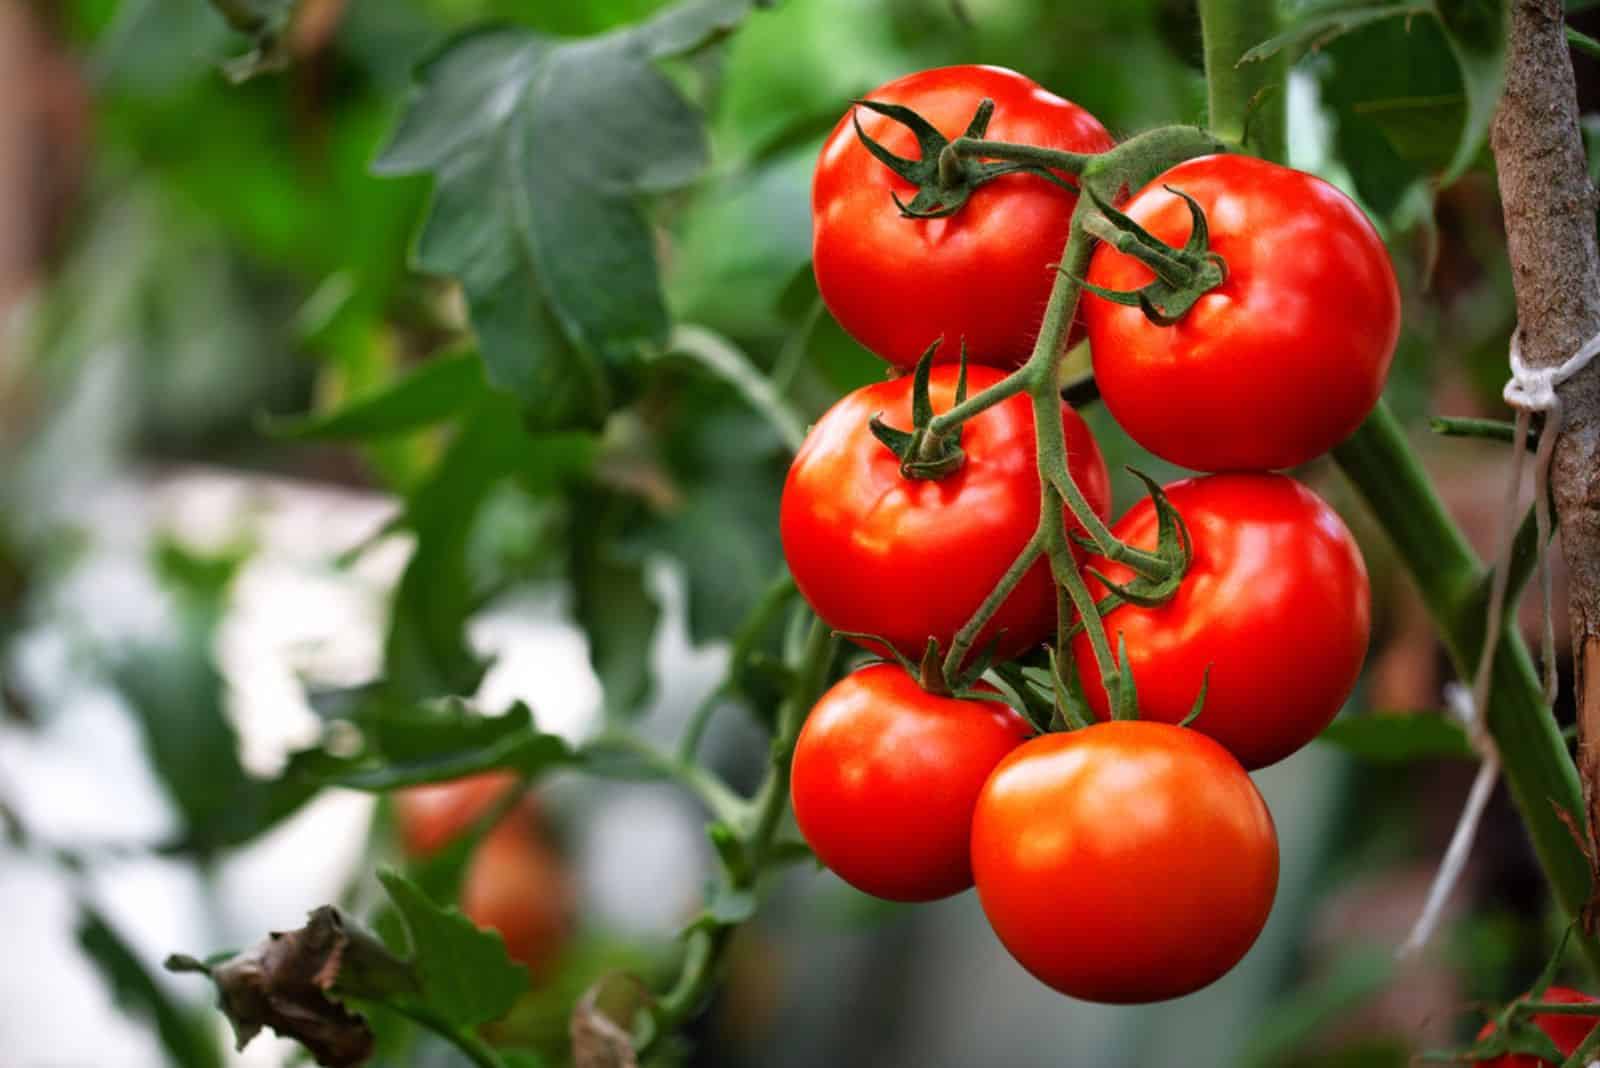 Ripe red organic tomato in greenhouse